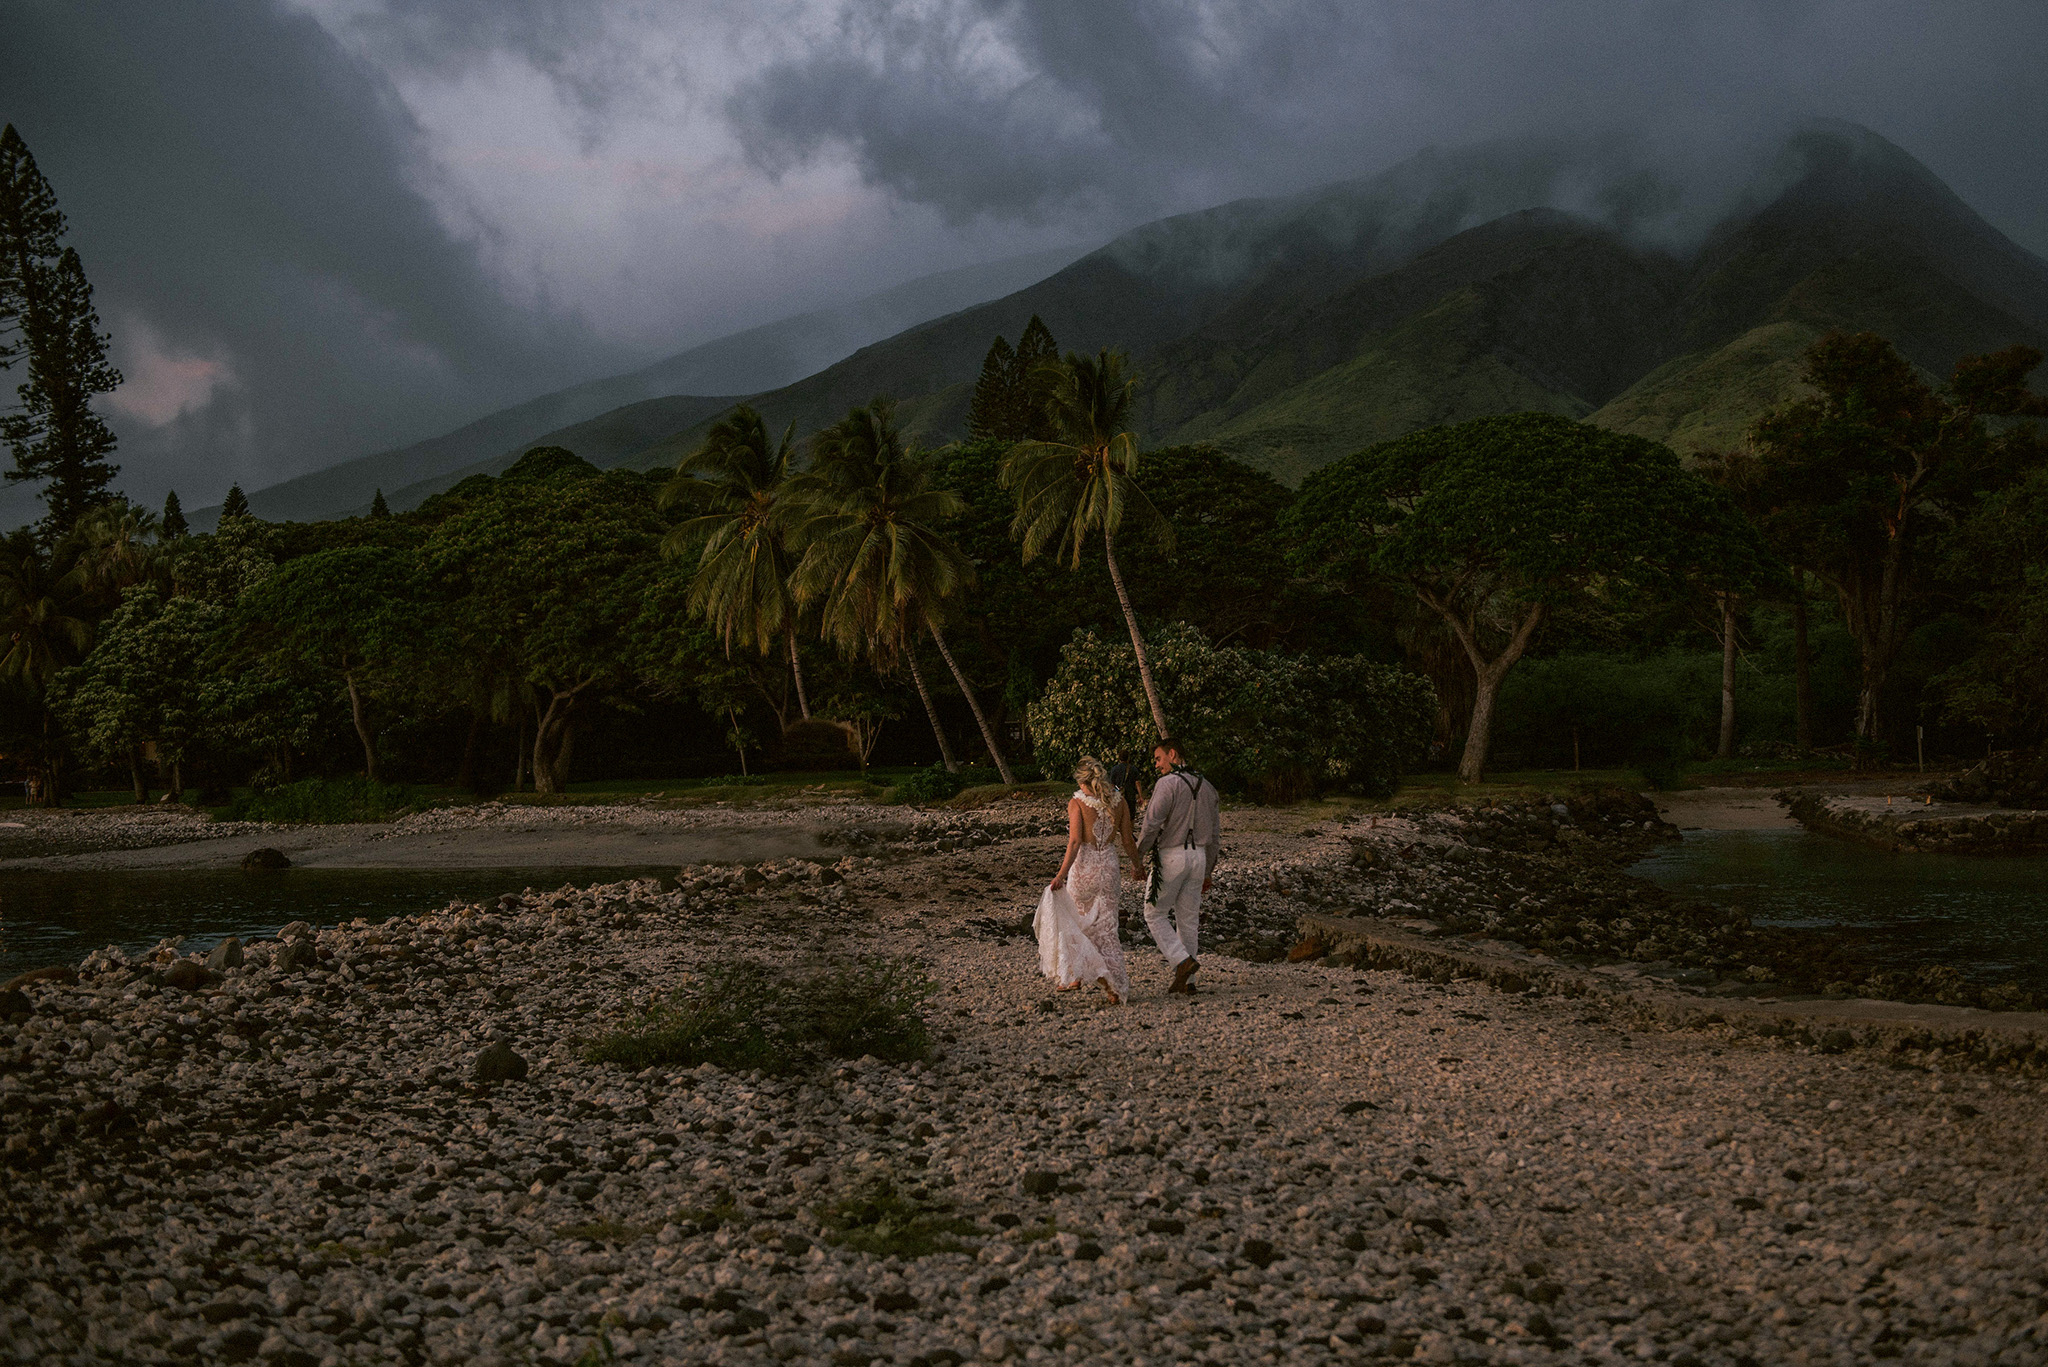 Most Inspiring Wedding and Elopement photographer of 2019